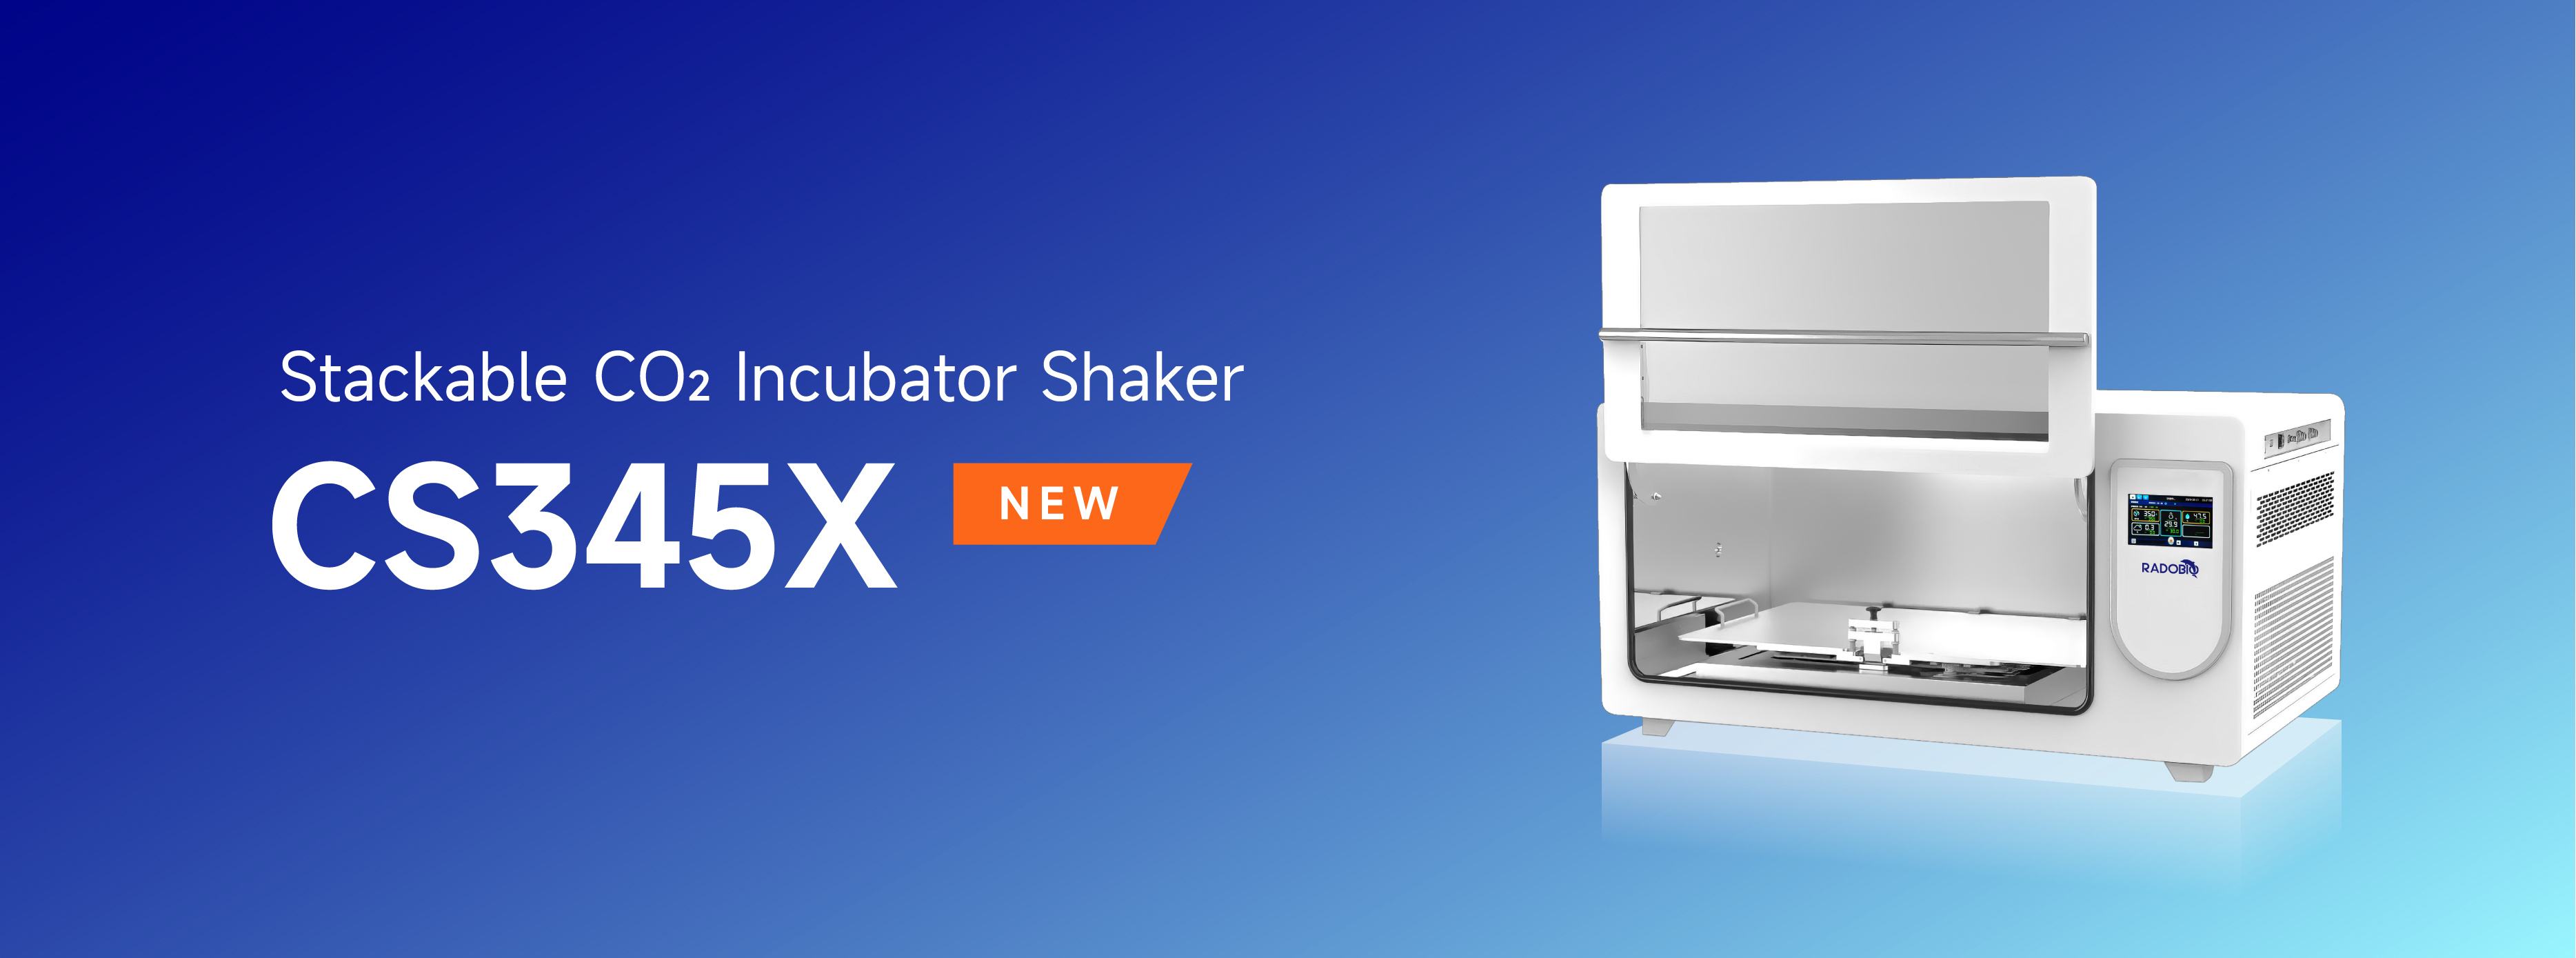 C345X co2 incubator shaker-banner